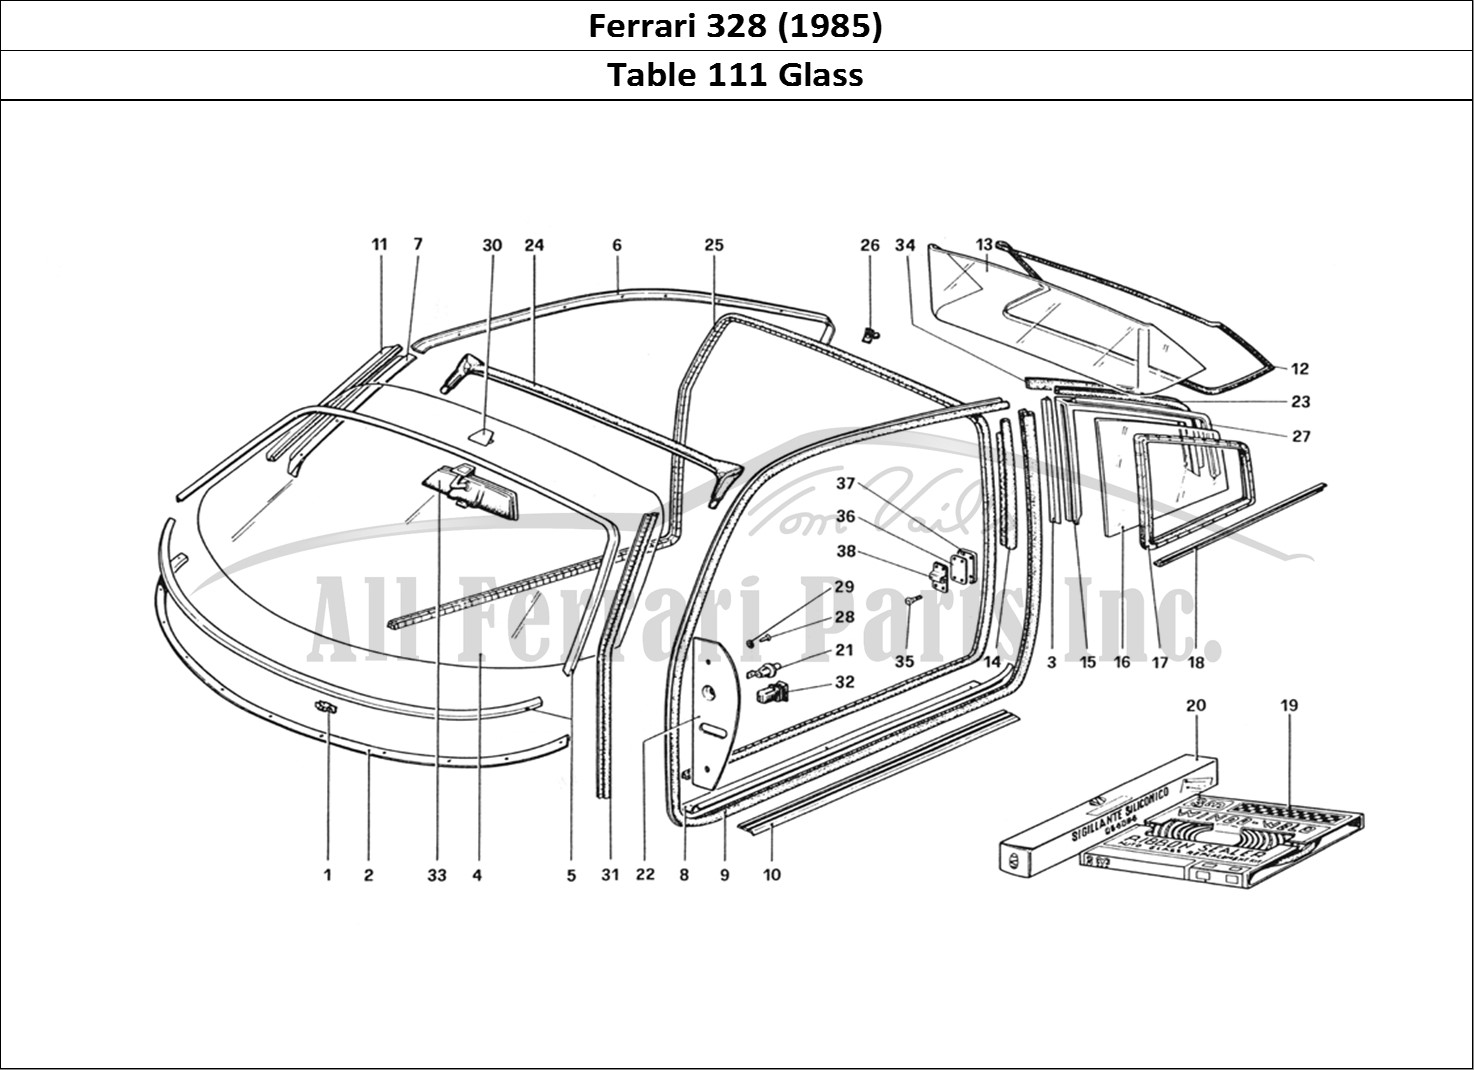 Ferrari Parts Ferrari 328 (1985) Page 111 Glasses